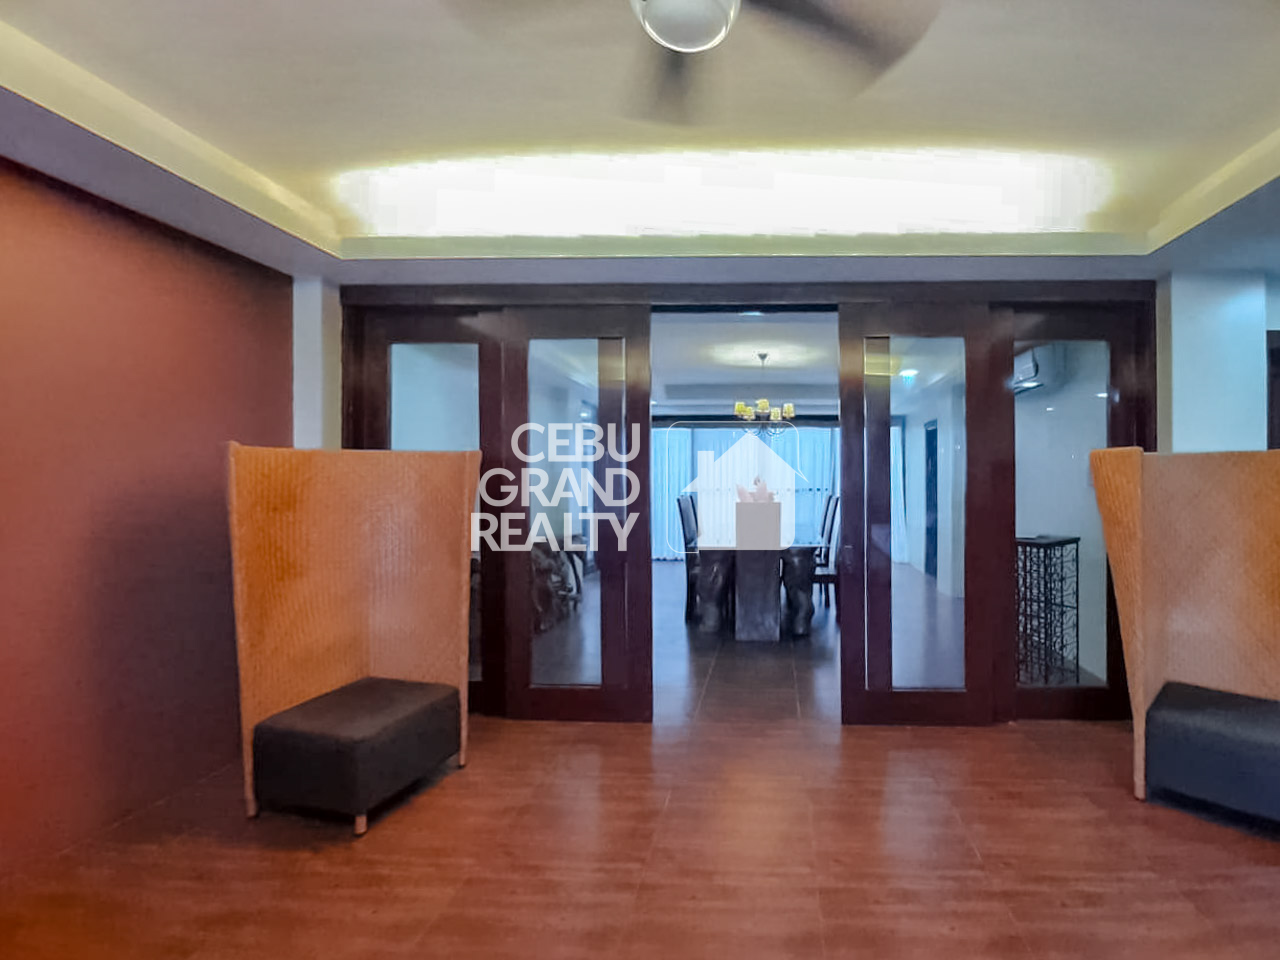 SRBAM3 6 Bedroom House for Sale in Amara Liloan - Cebu Grand Realty (2)